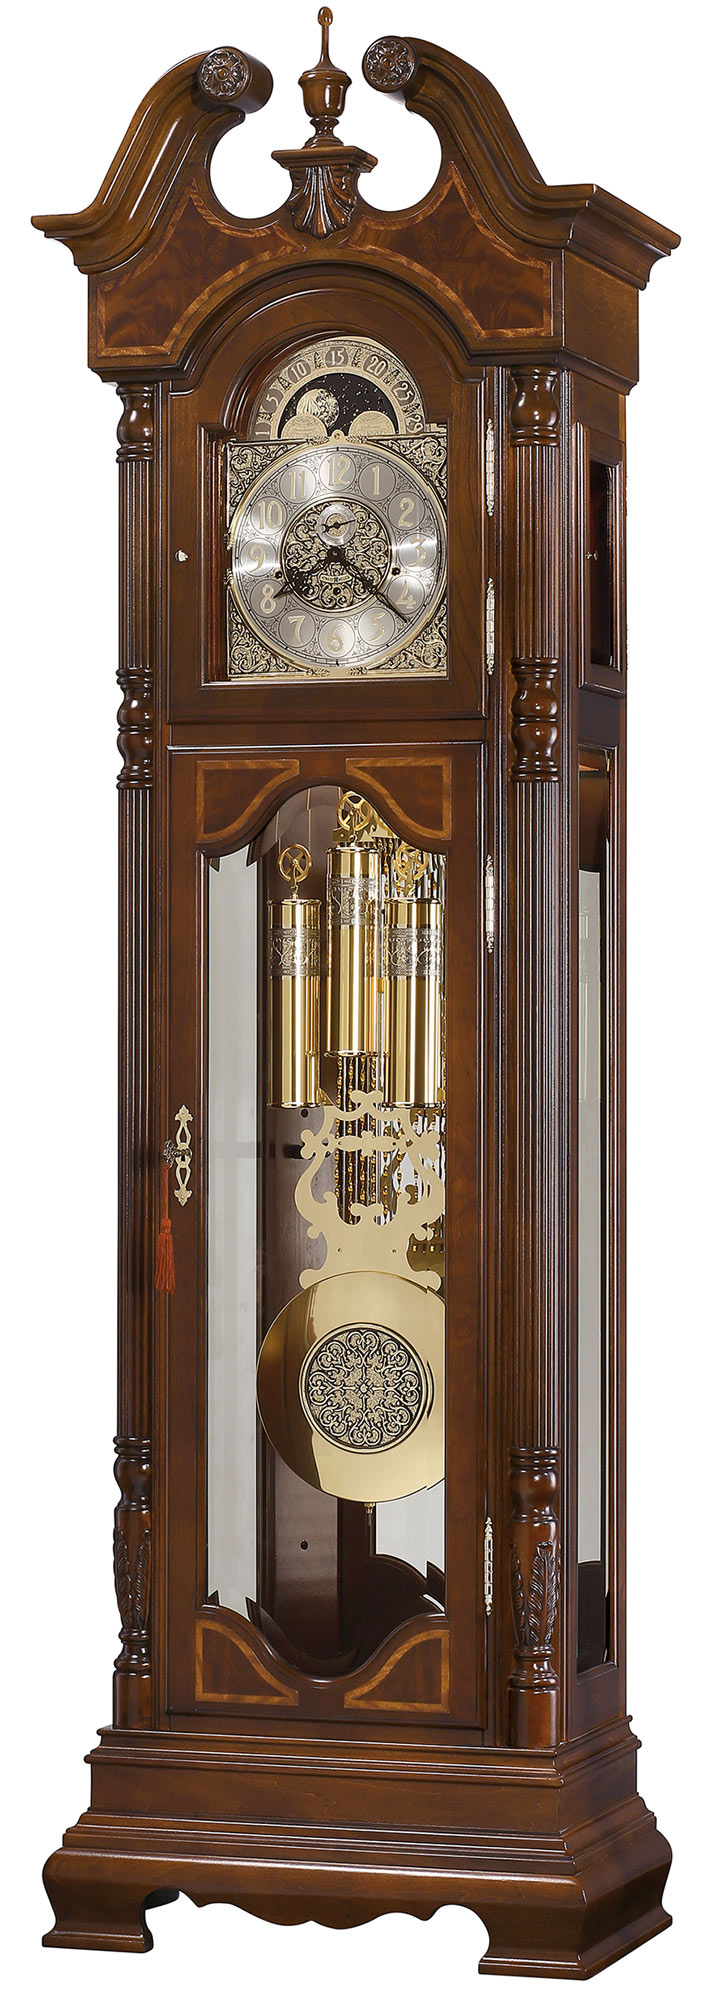 Polk Grandfather Clock by Howard Miller